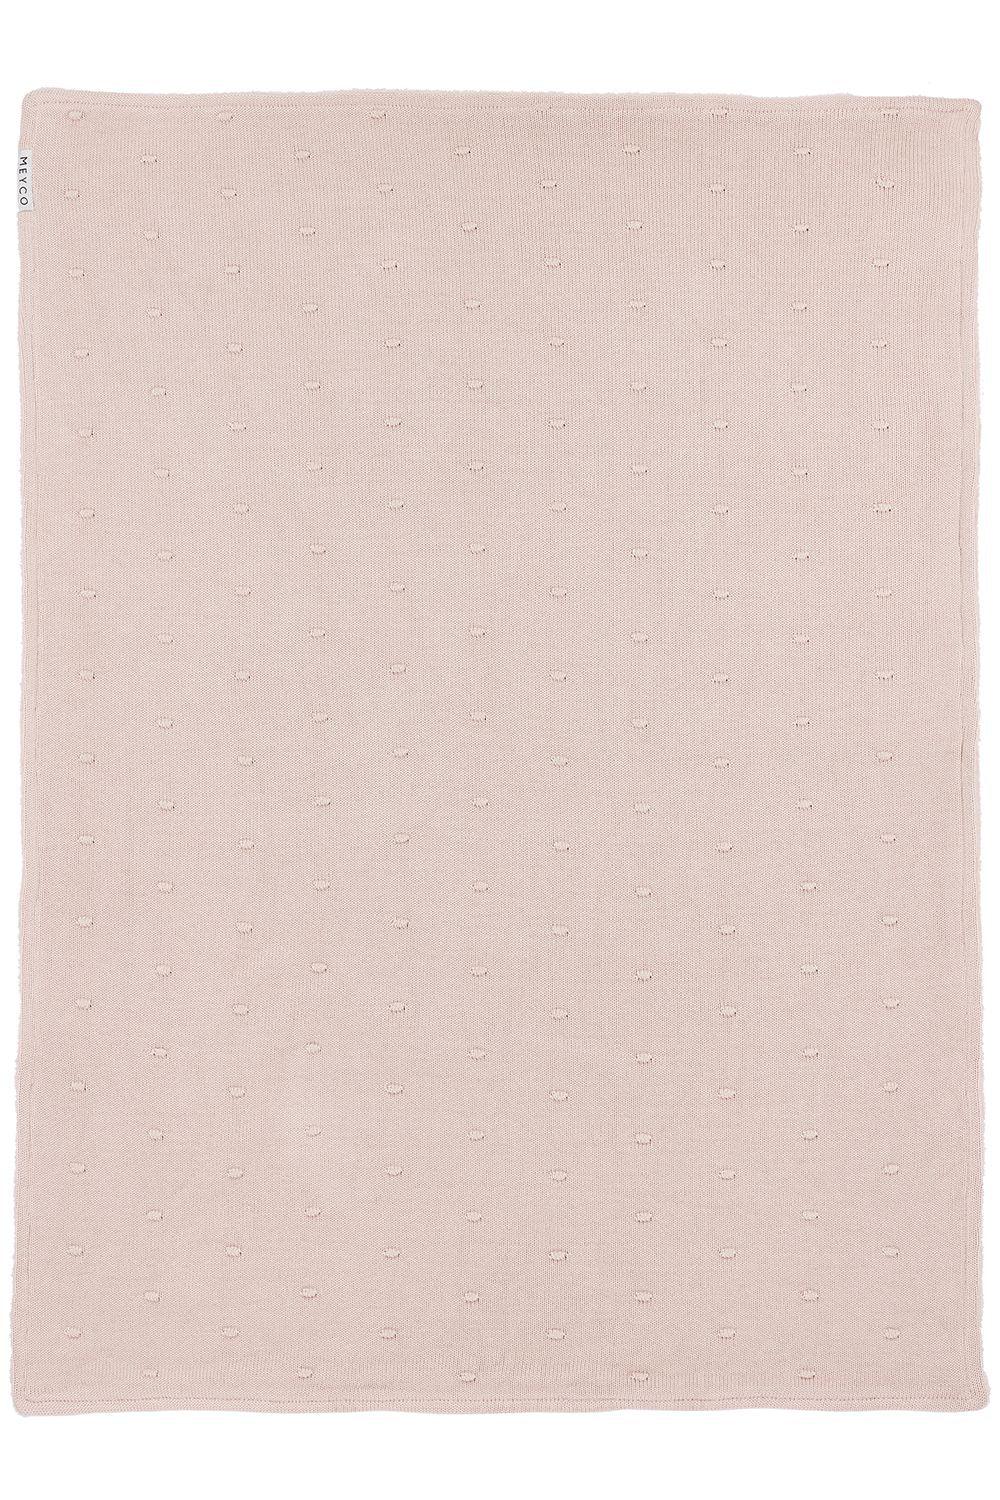 Cot Blanket Velvet Knots Teddy - Soft Pink 100x150cm - Mari Kali Stores Cyprus